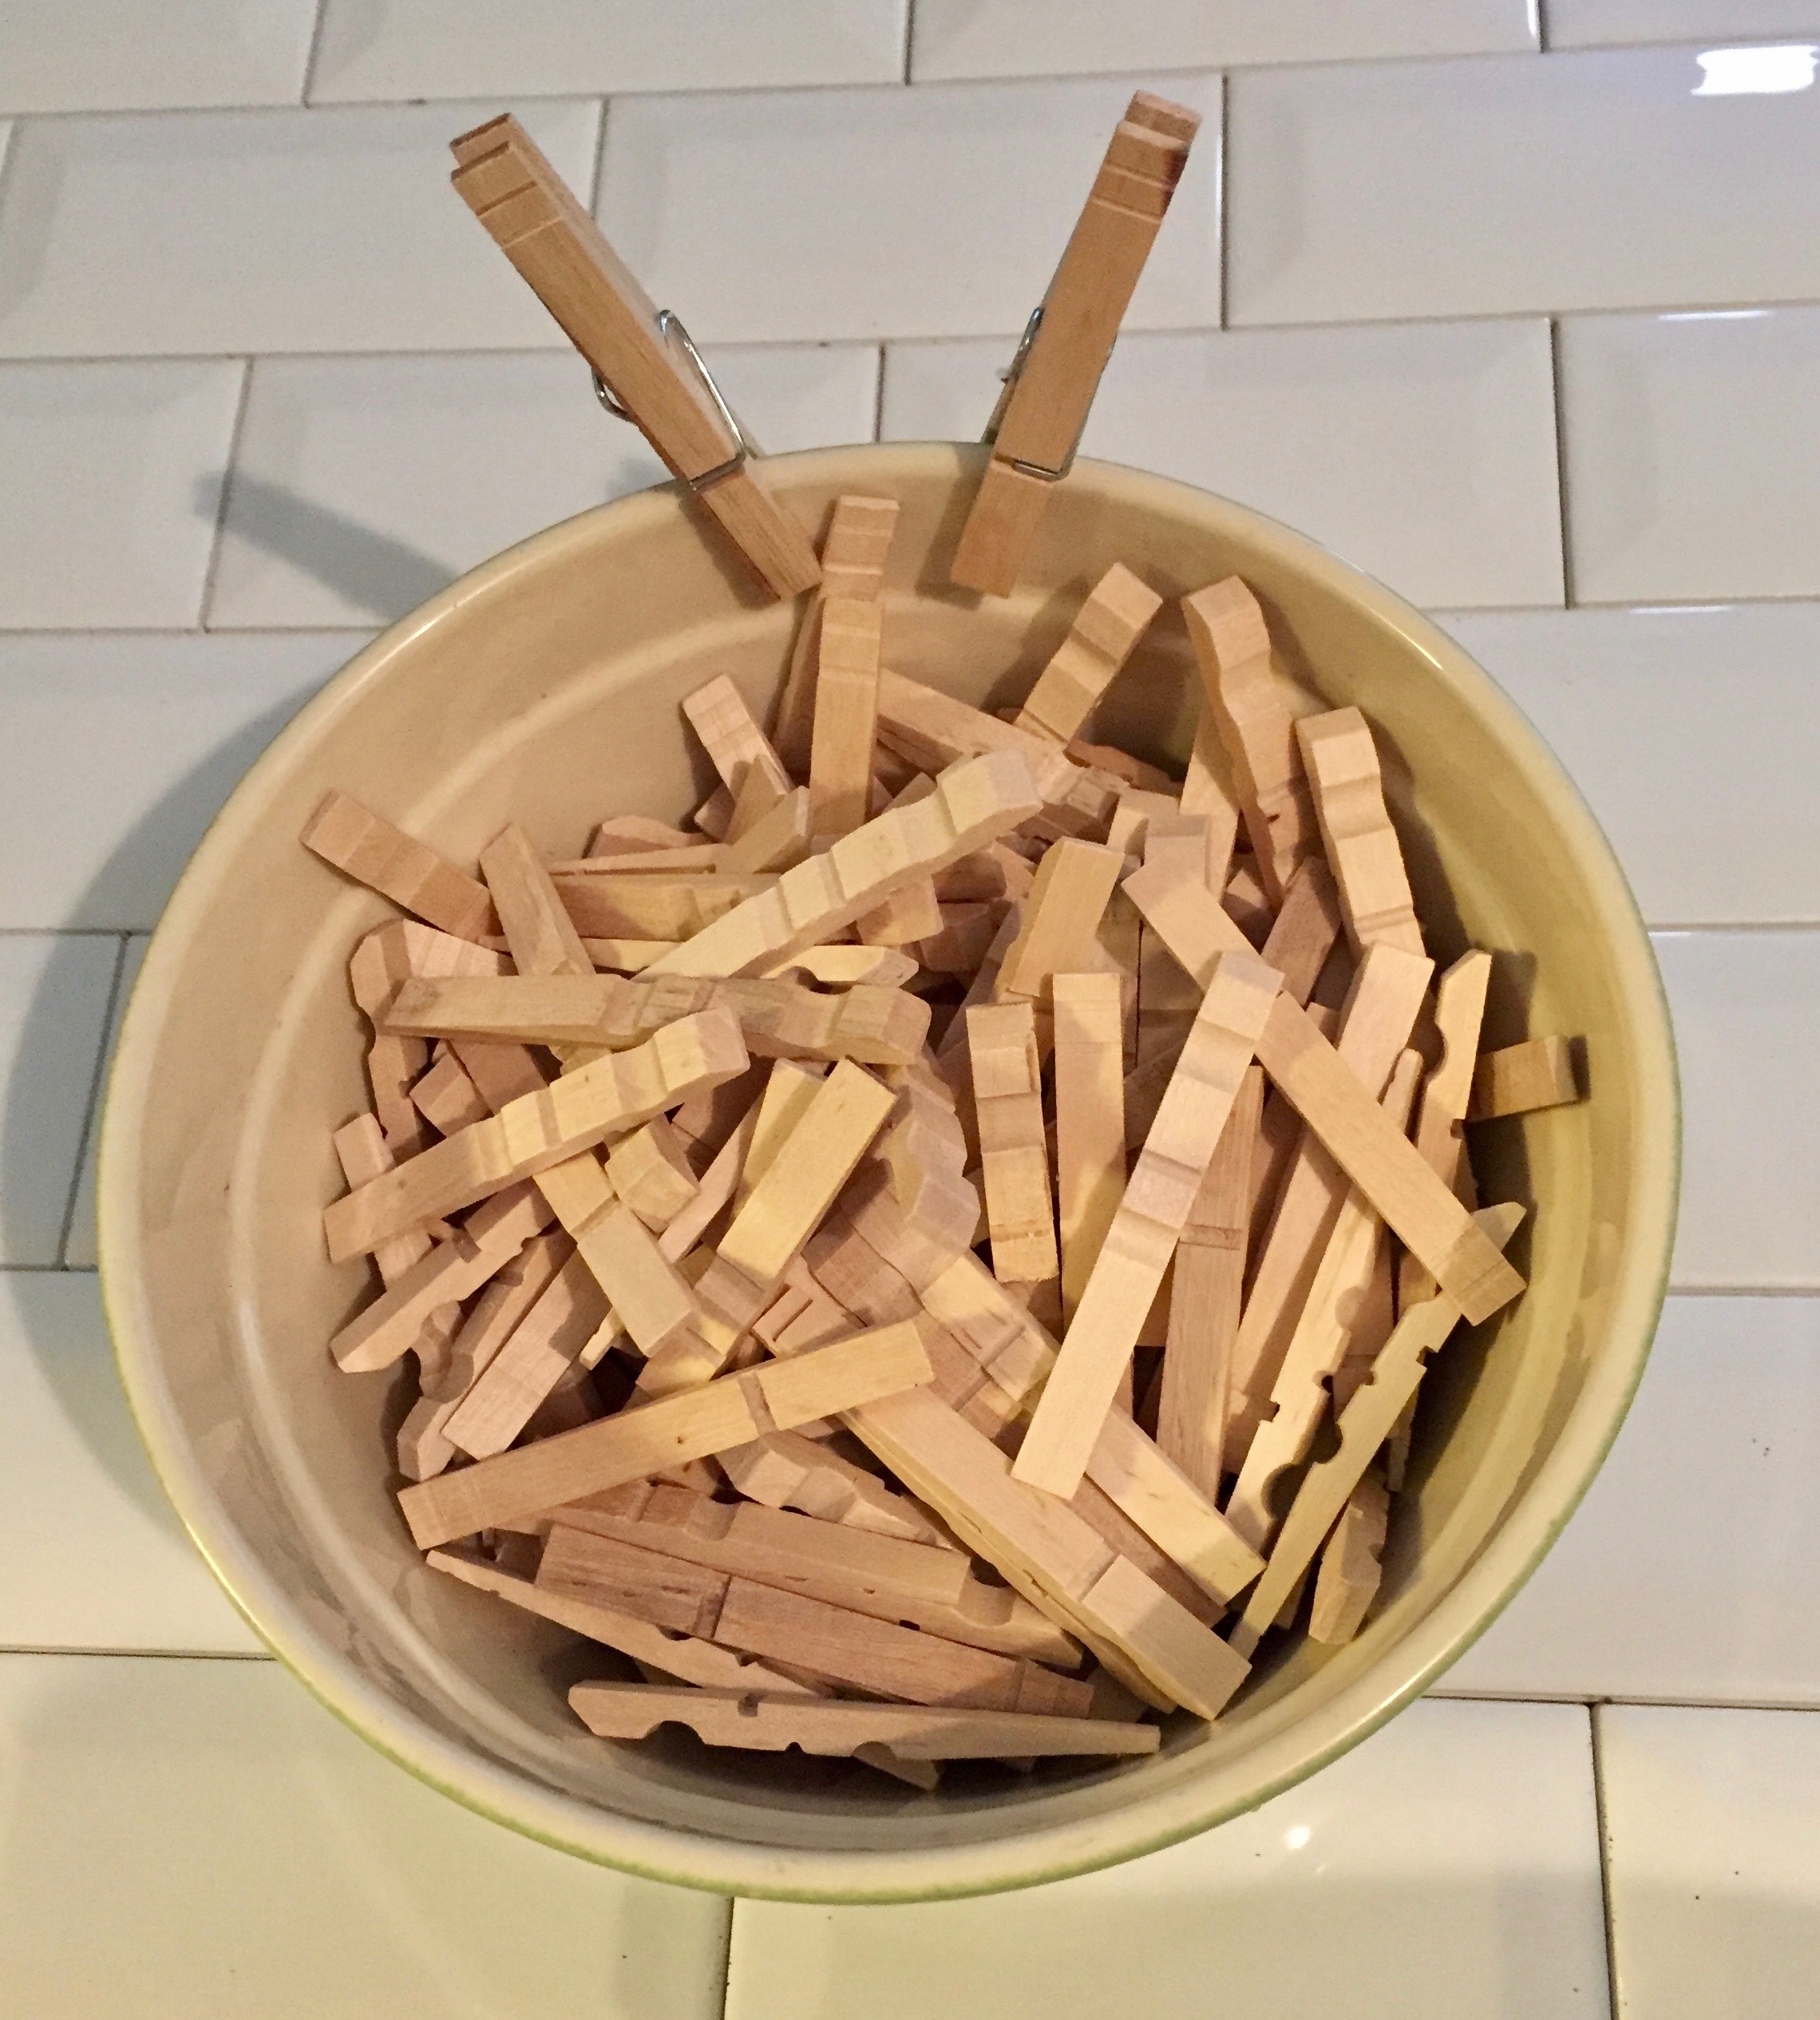 Wood Clothespins, 50-Pk.